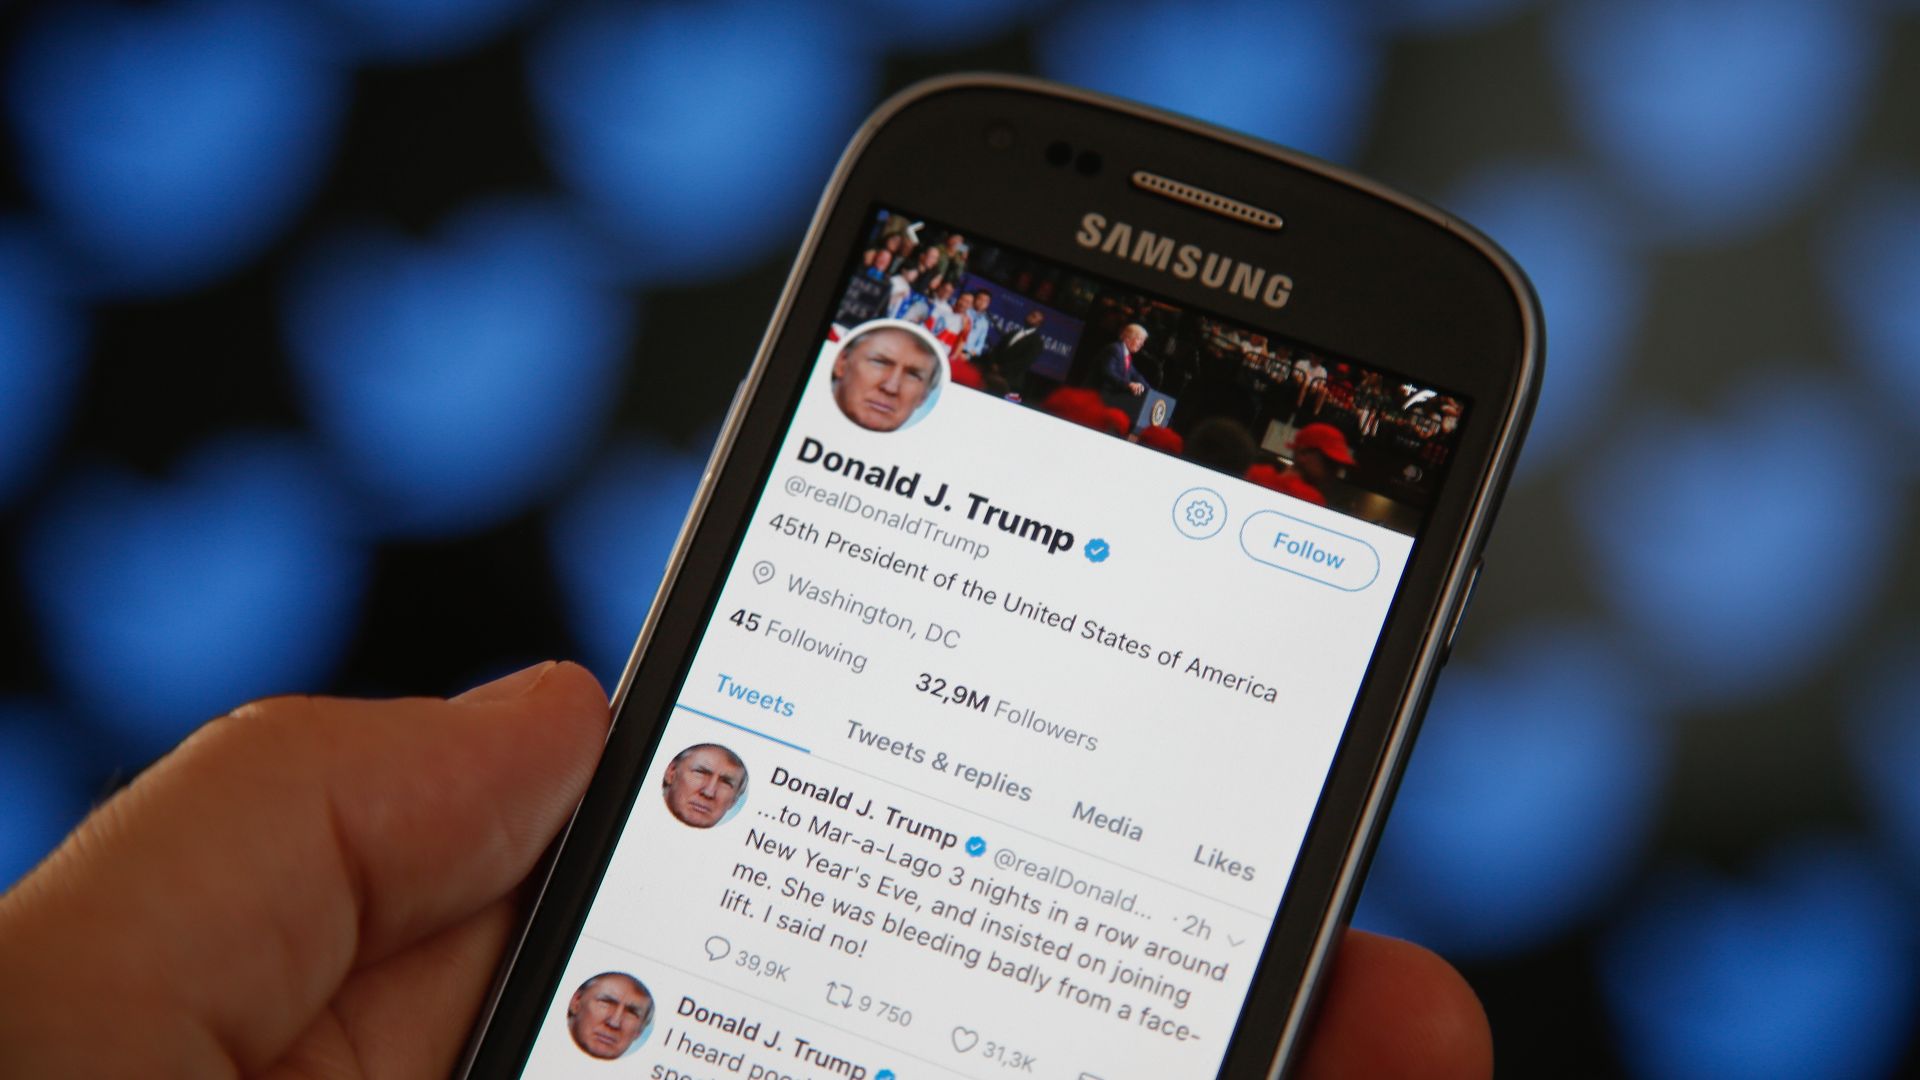 Trump twitter feed